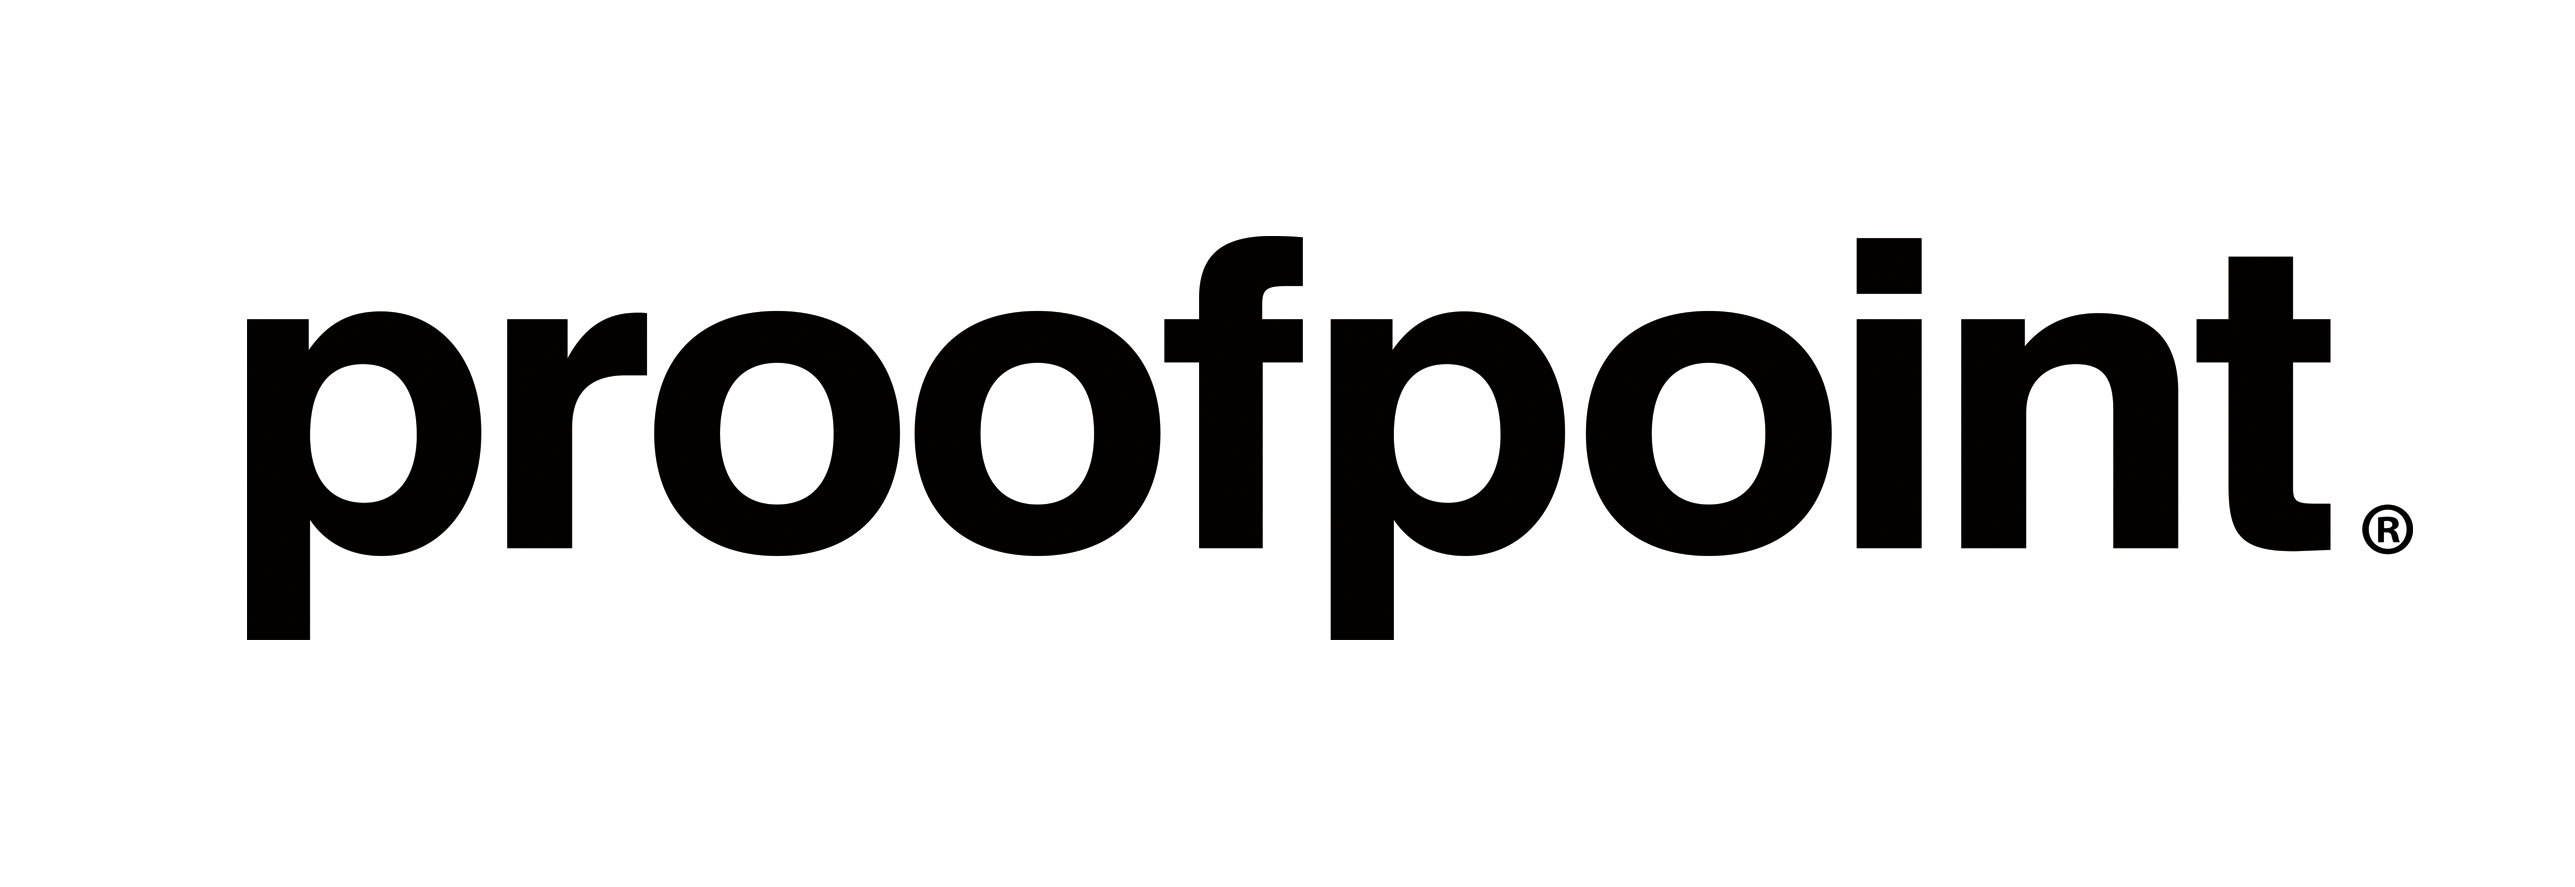 proofpoint_logo